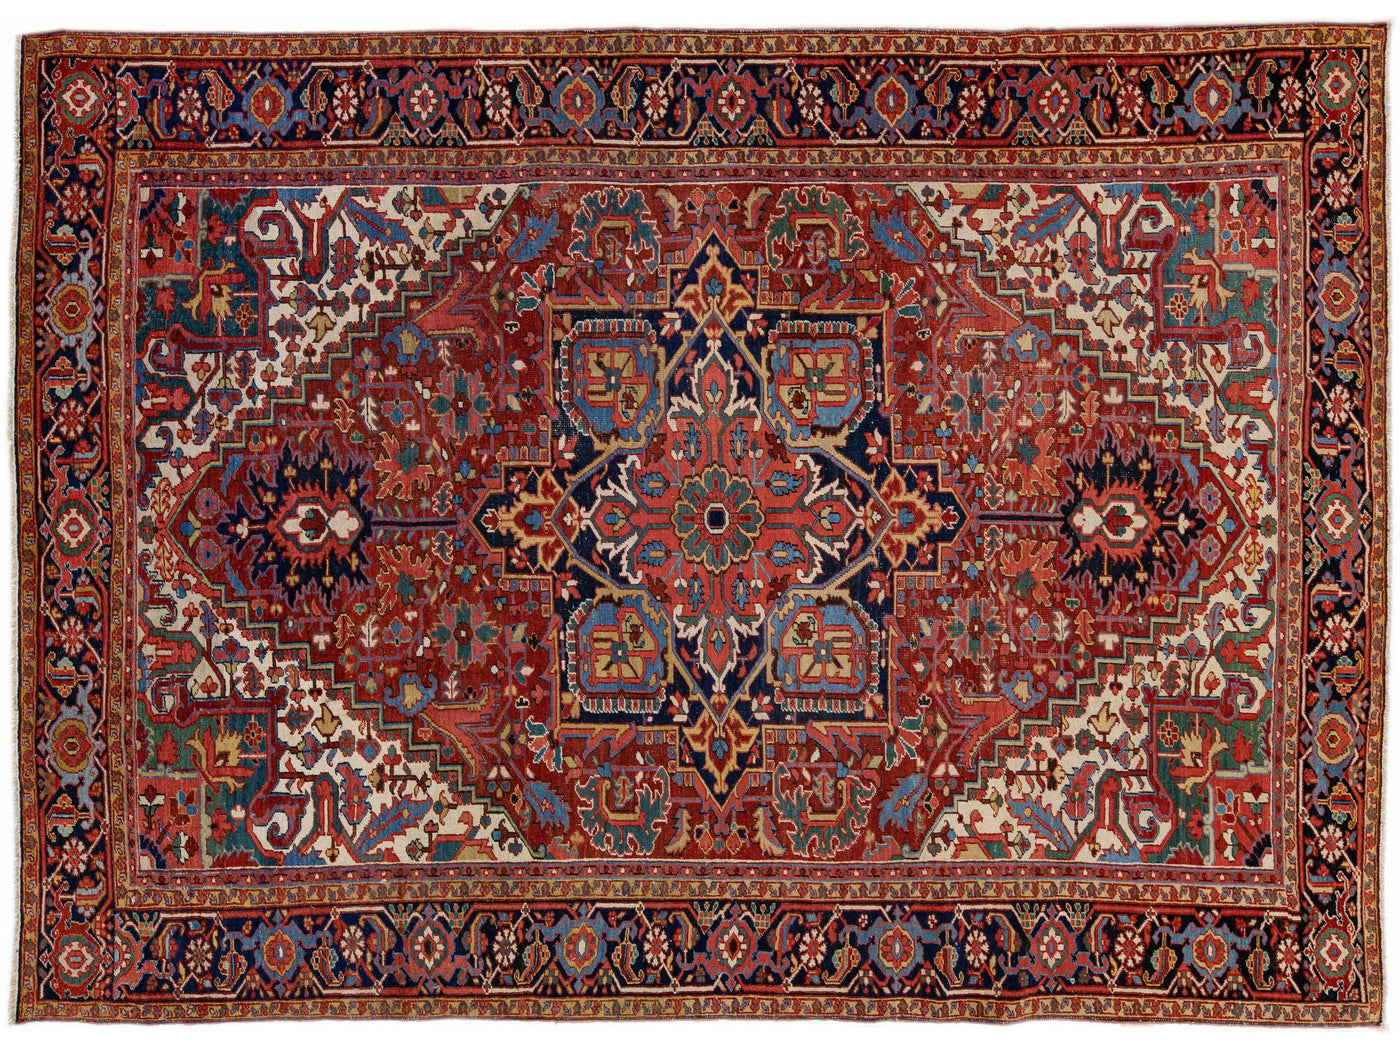 Antique Persian Heriz Red Handmade Wool Rug with Medallion Design